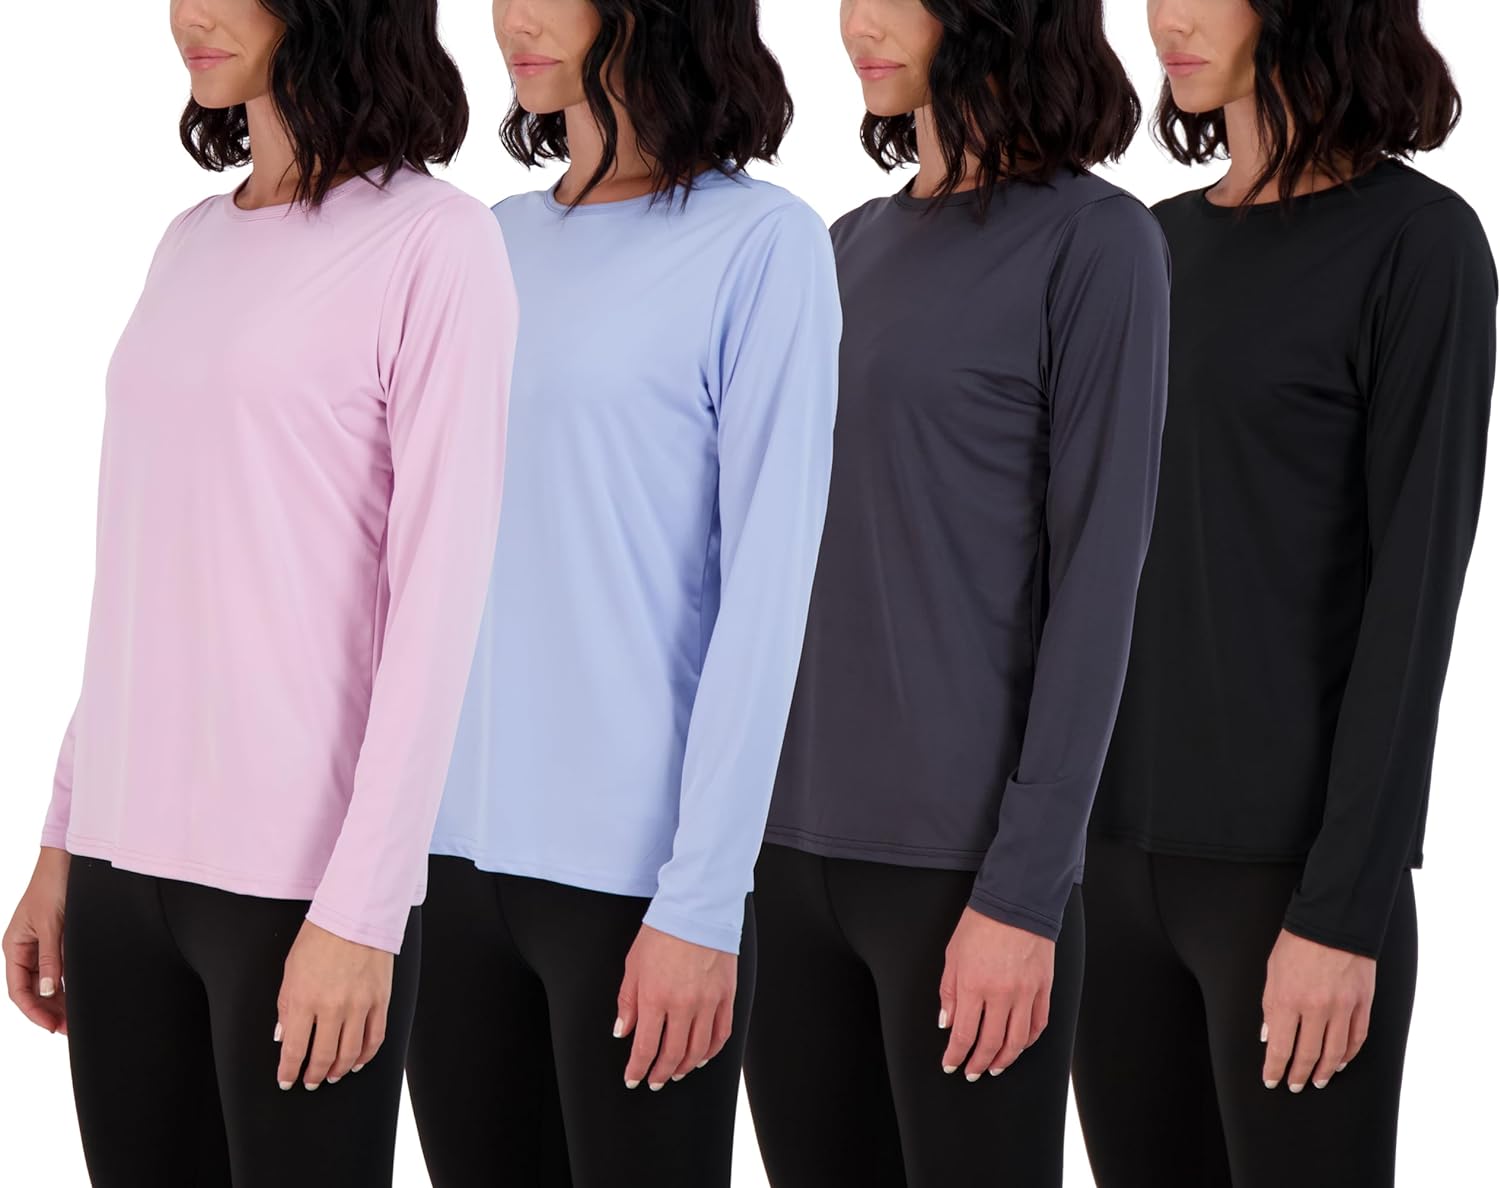  Long Sleeve Workout Shirts for Women,Moisture Wicking